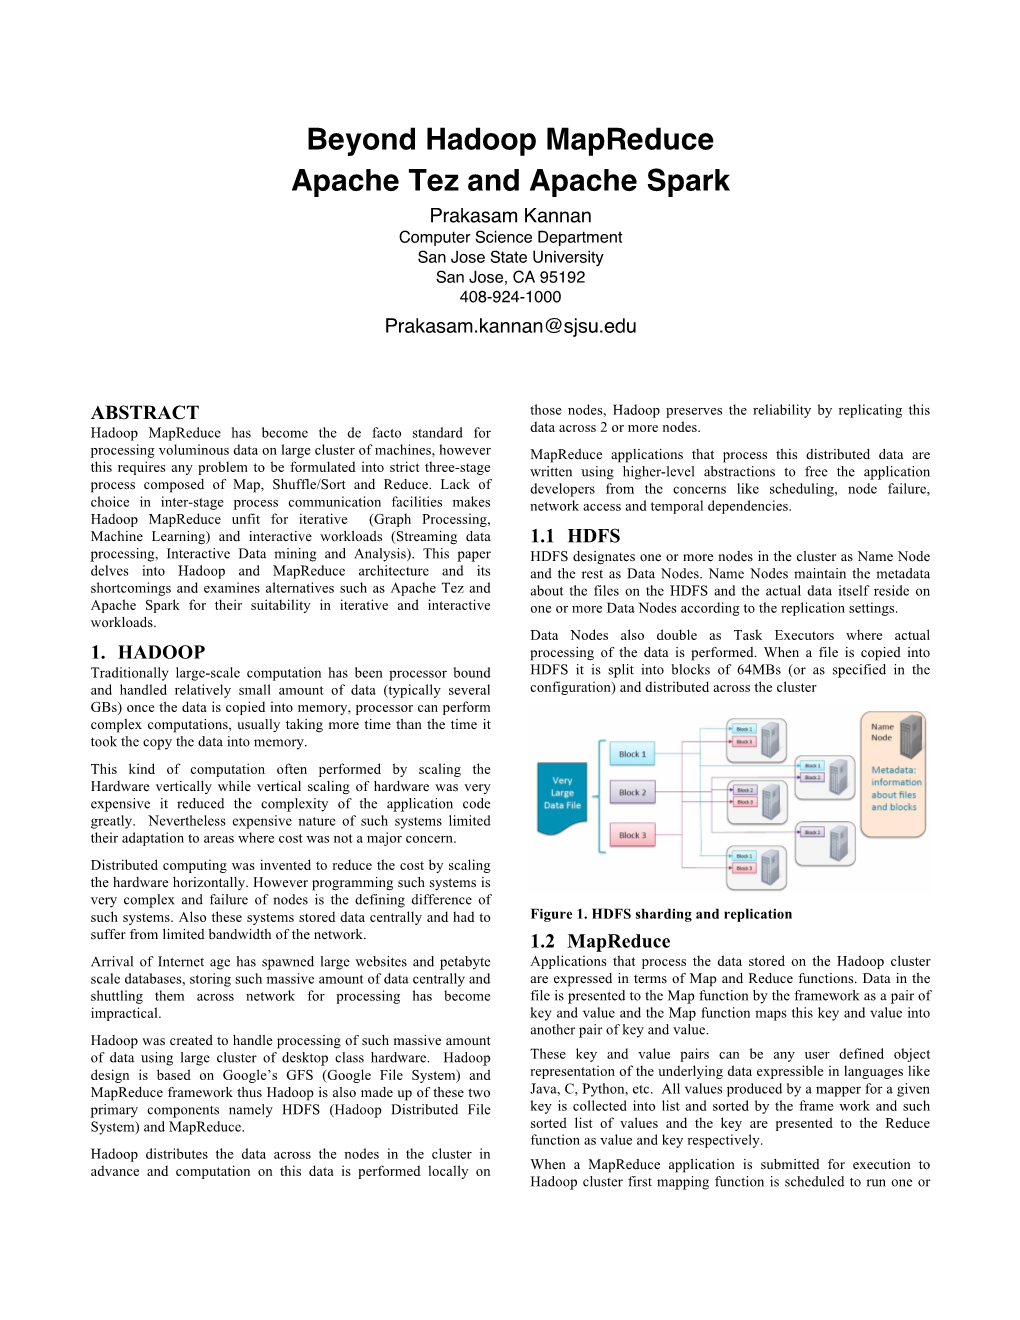 Beyond Hadoop Mapreduce Apache Tez and Apache Spark